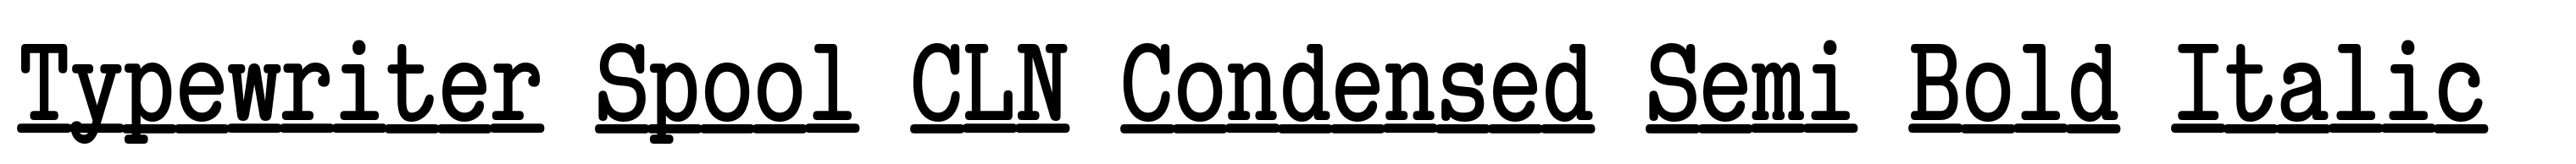 Typewriter Spool CLN Condensed Semi Bold Italic